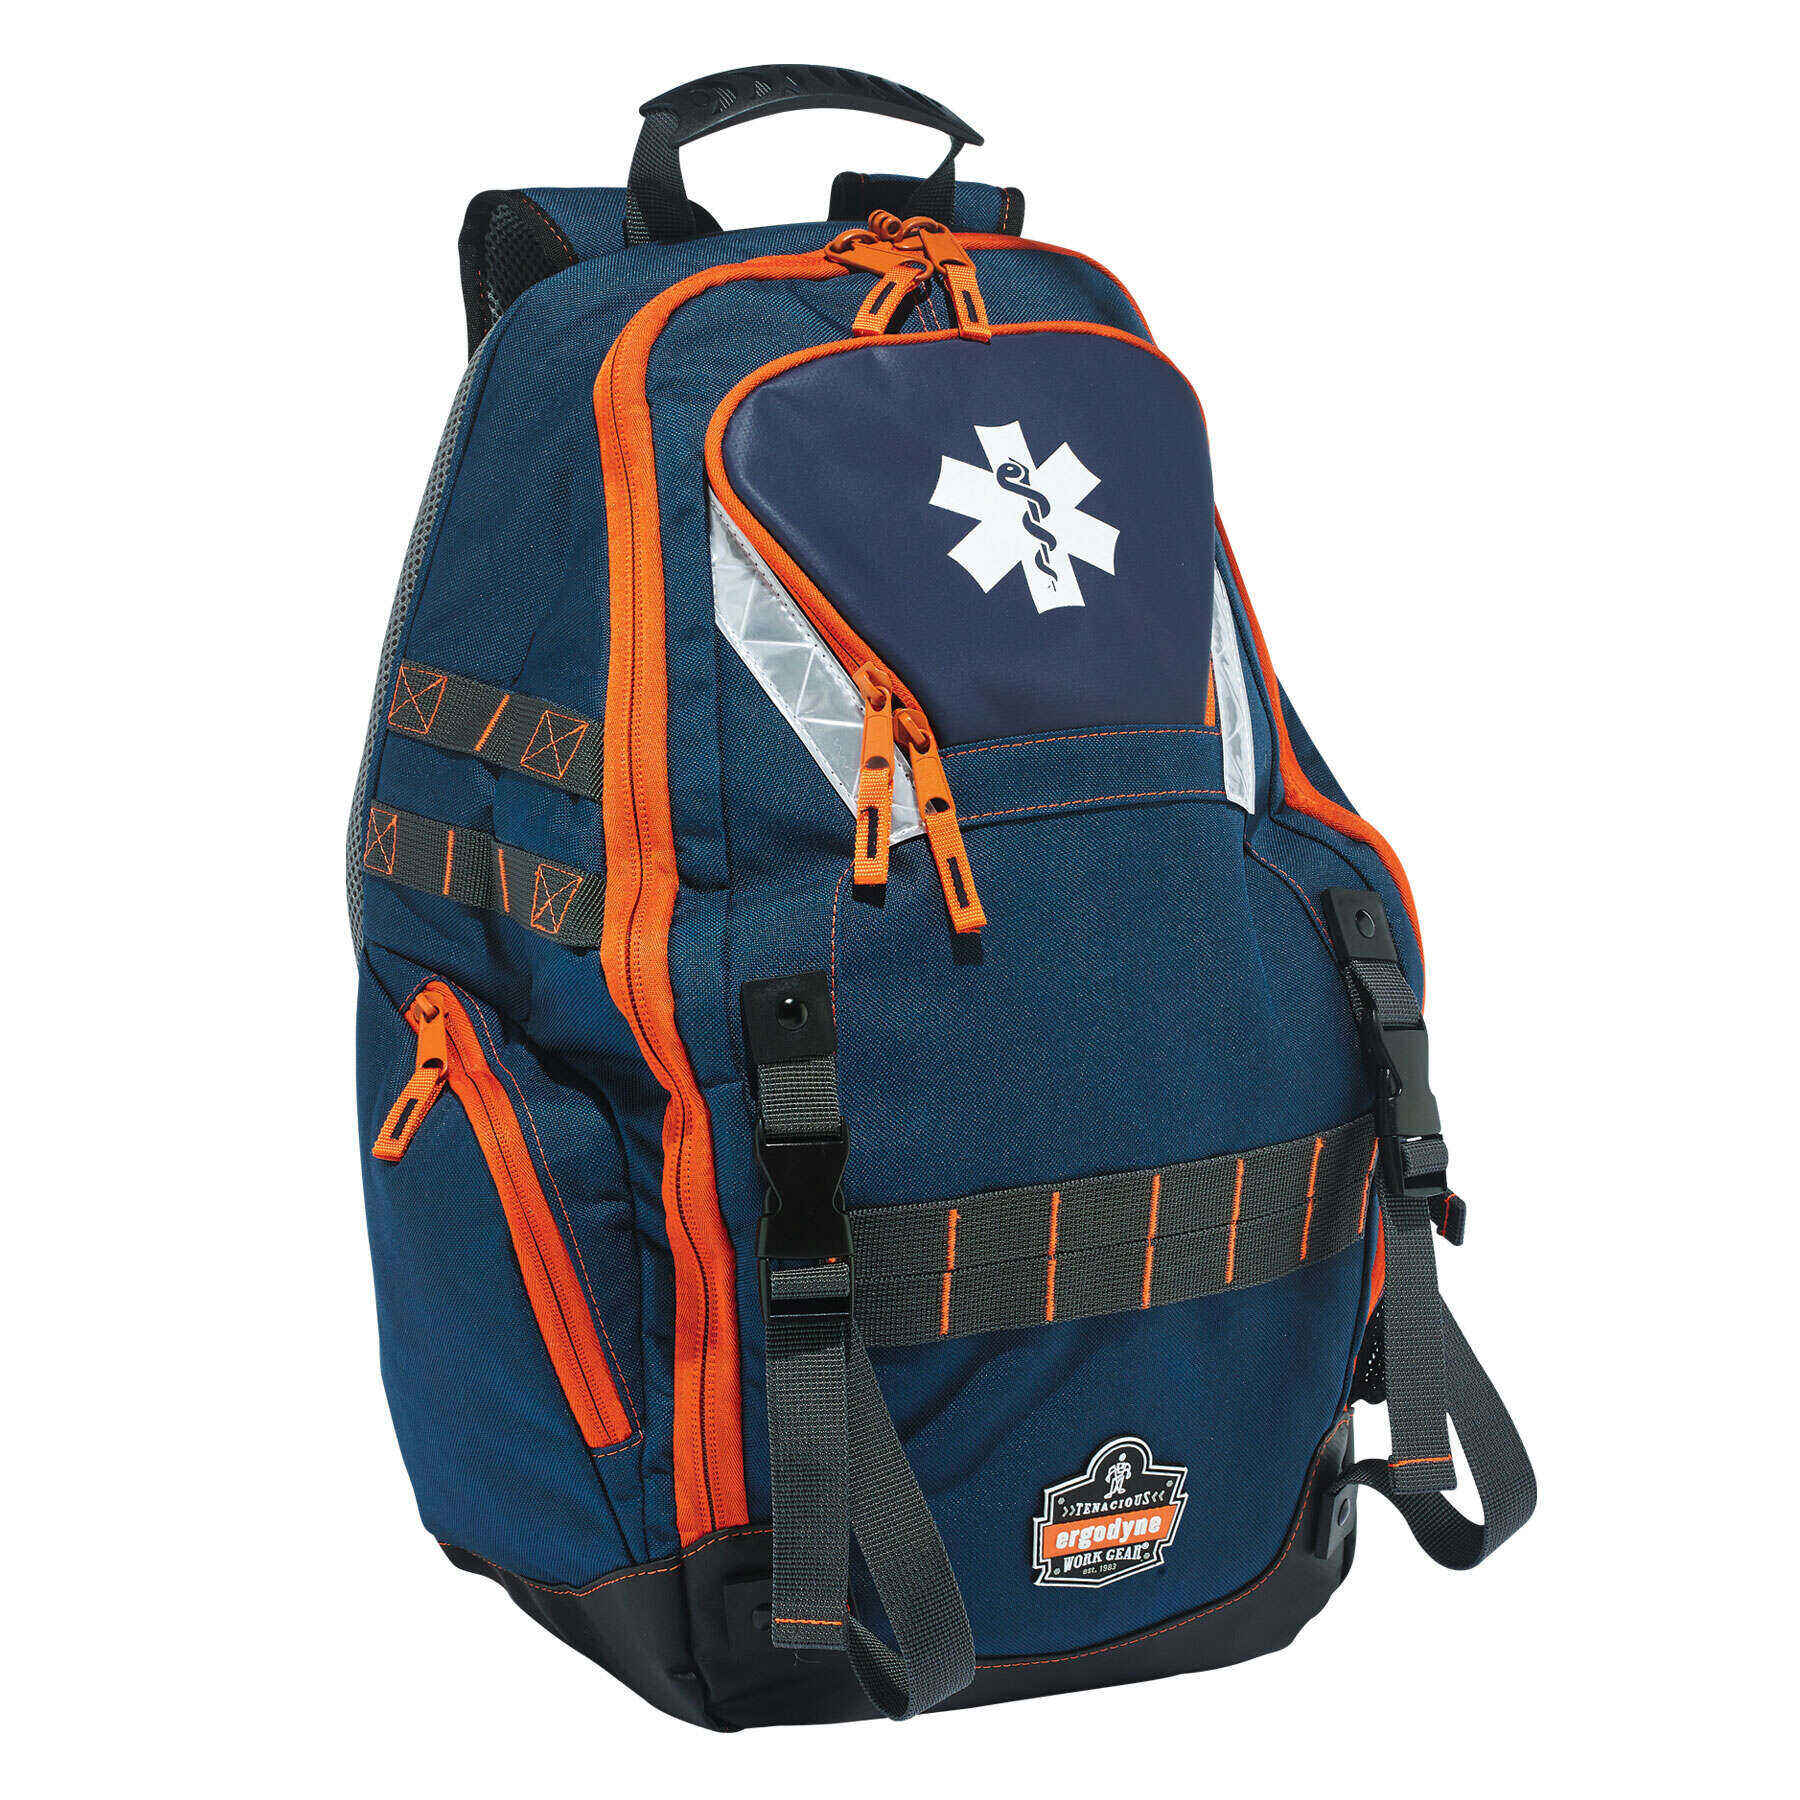 Ergodyne Arsenal 5216 First Responder Medical Trauma Supply Jump Bag for EMS Firefighters Police